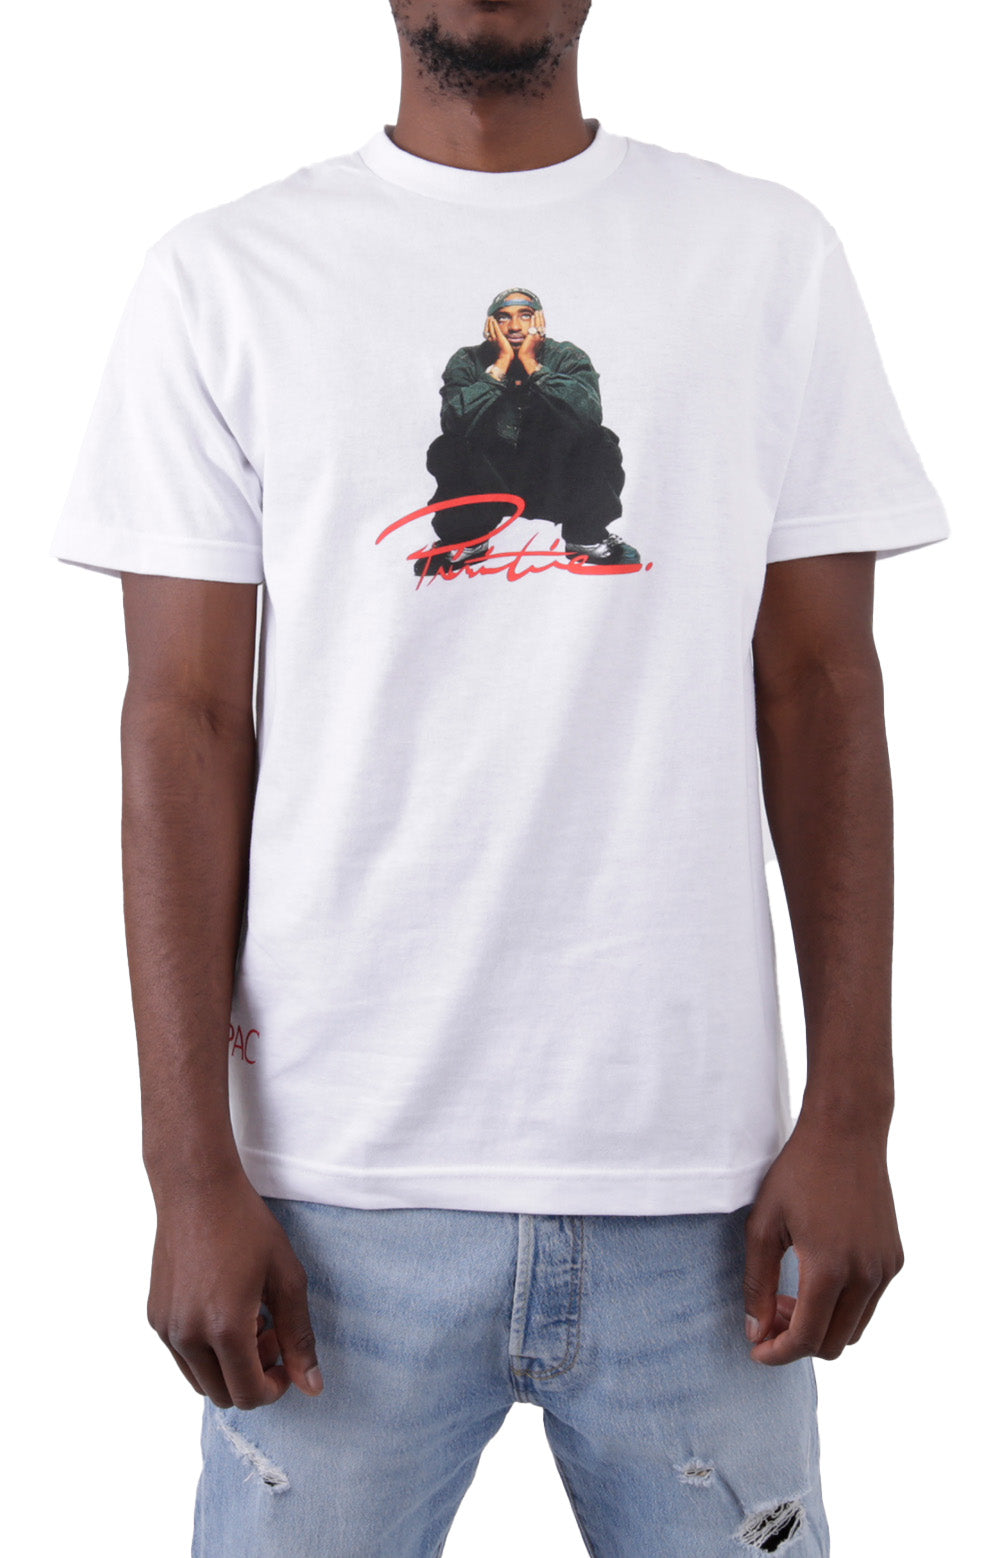 x Tupac Shakur T-Shirt - White